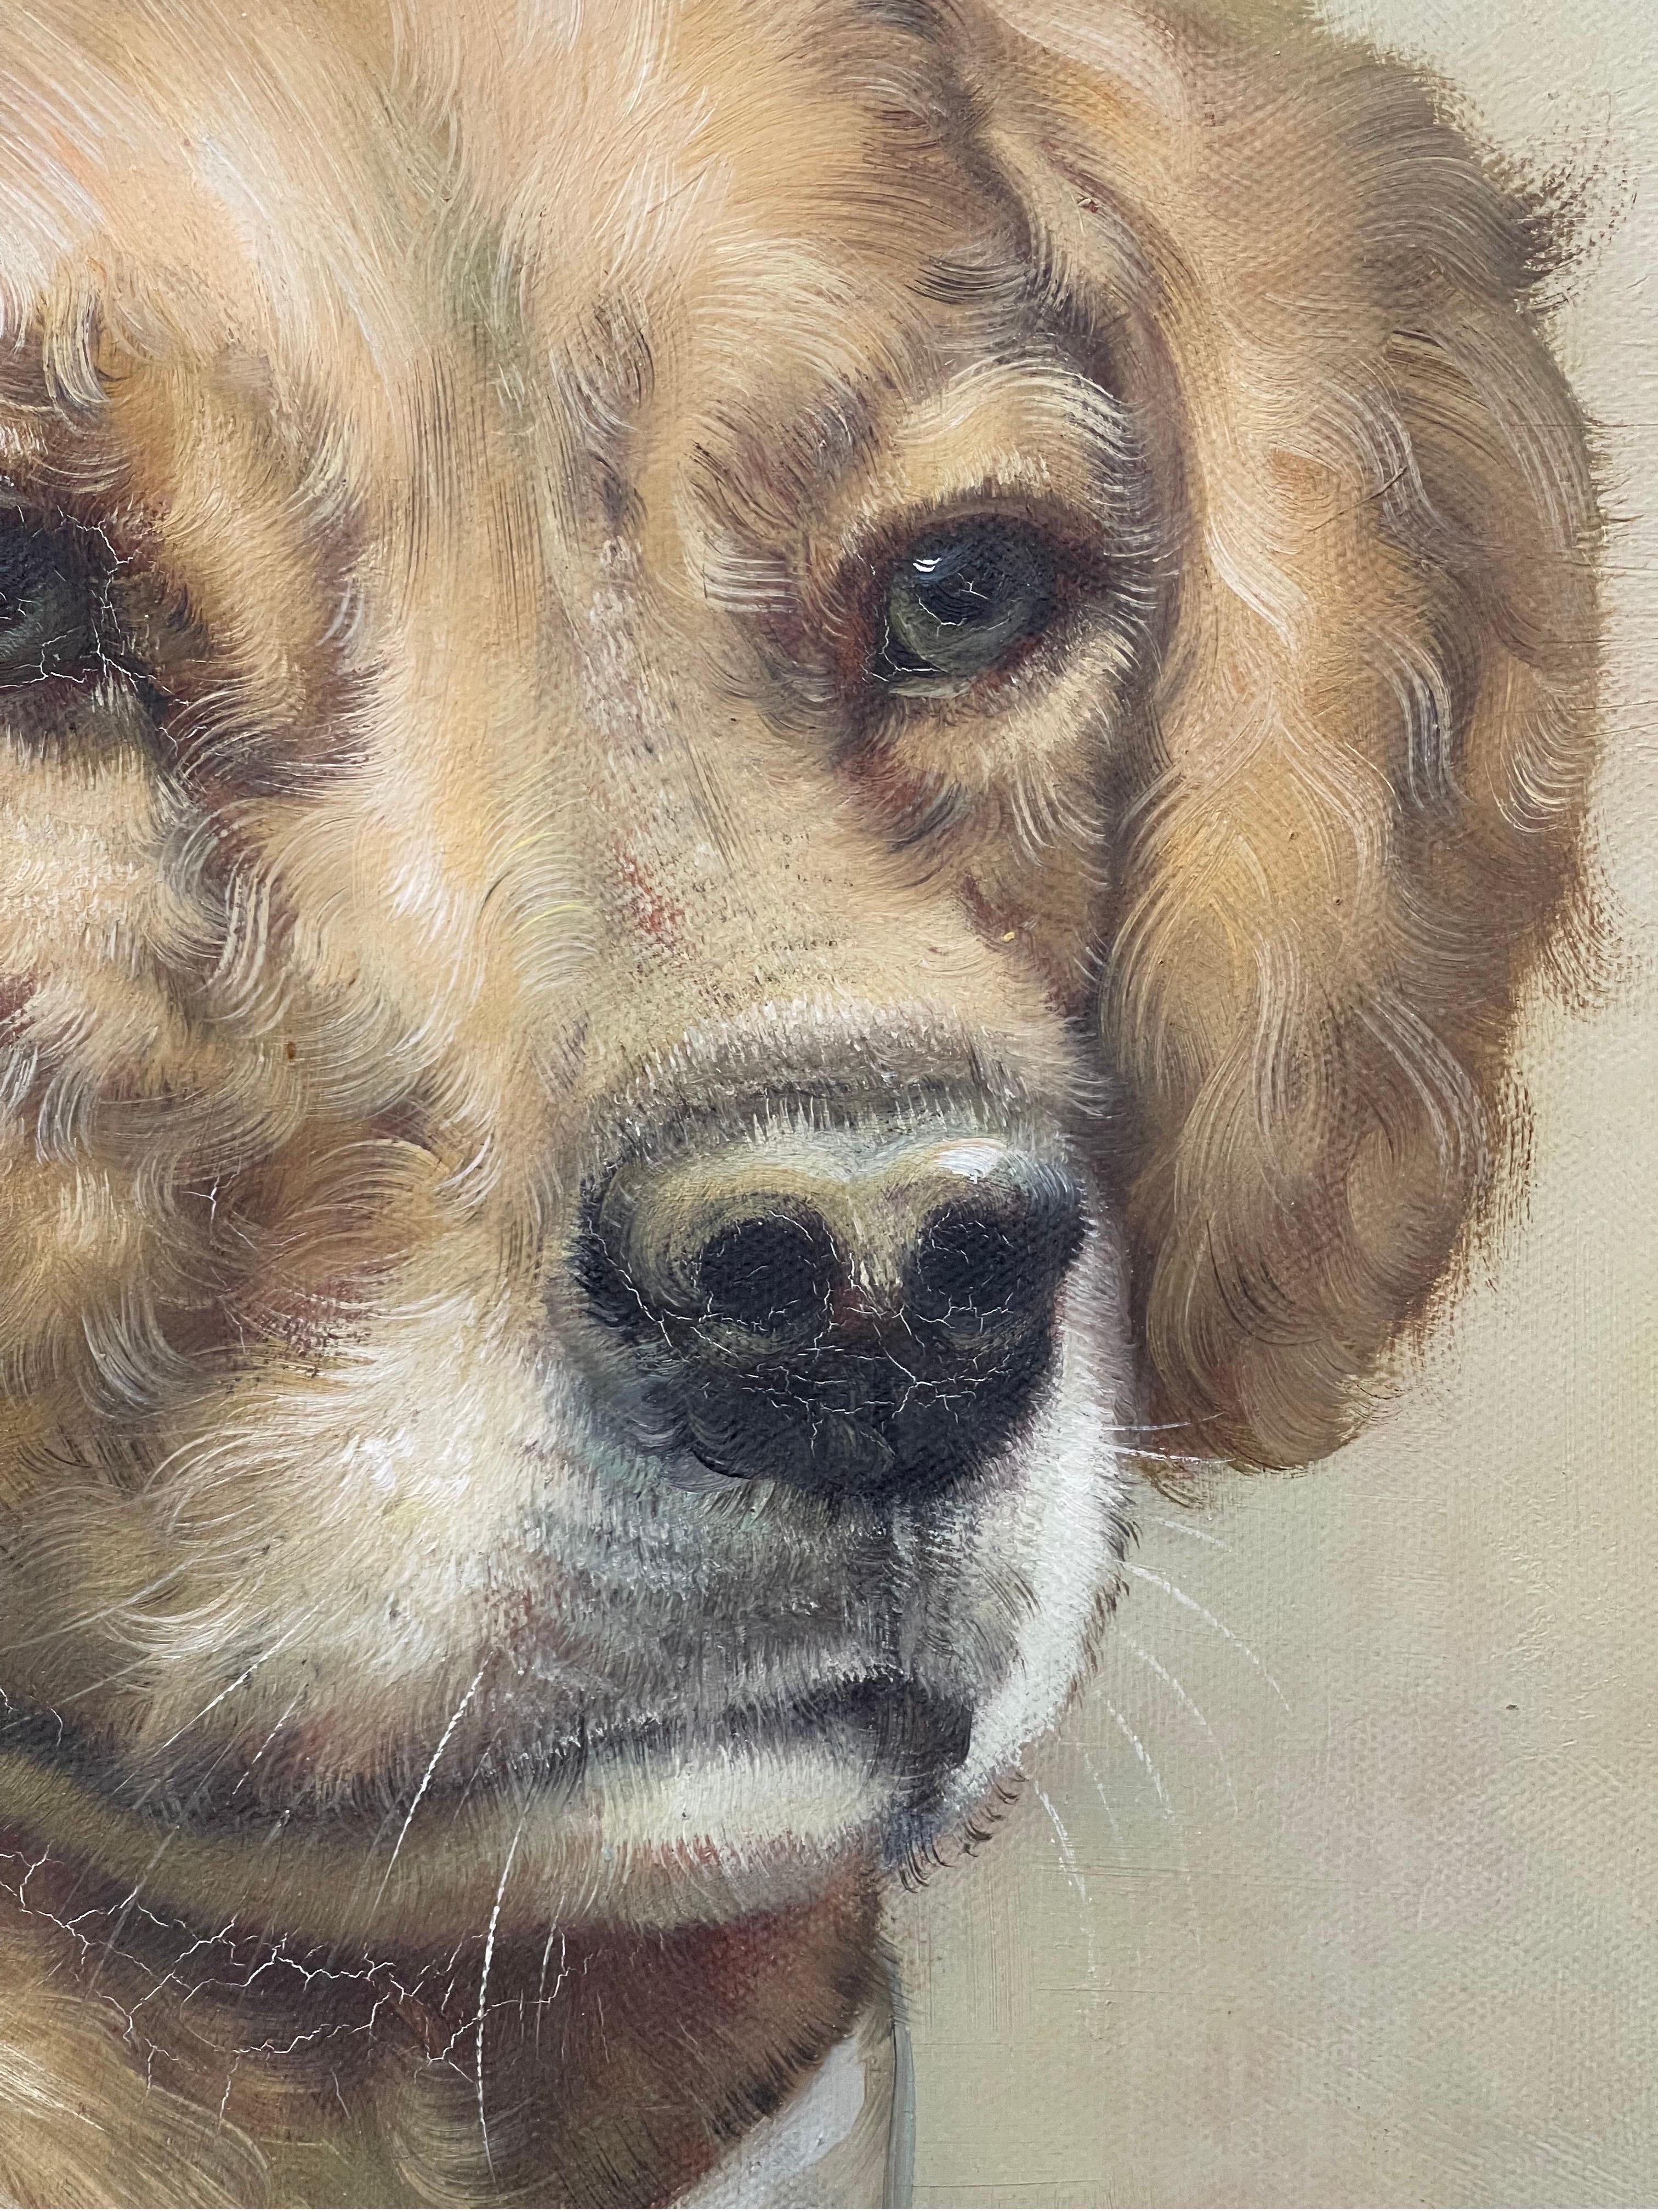 Anthropomorphic Golden Retriever Dog in Tuxedo, Acrylic on Canvas Painting 5